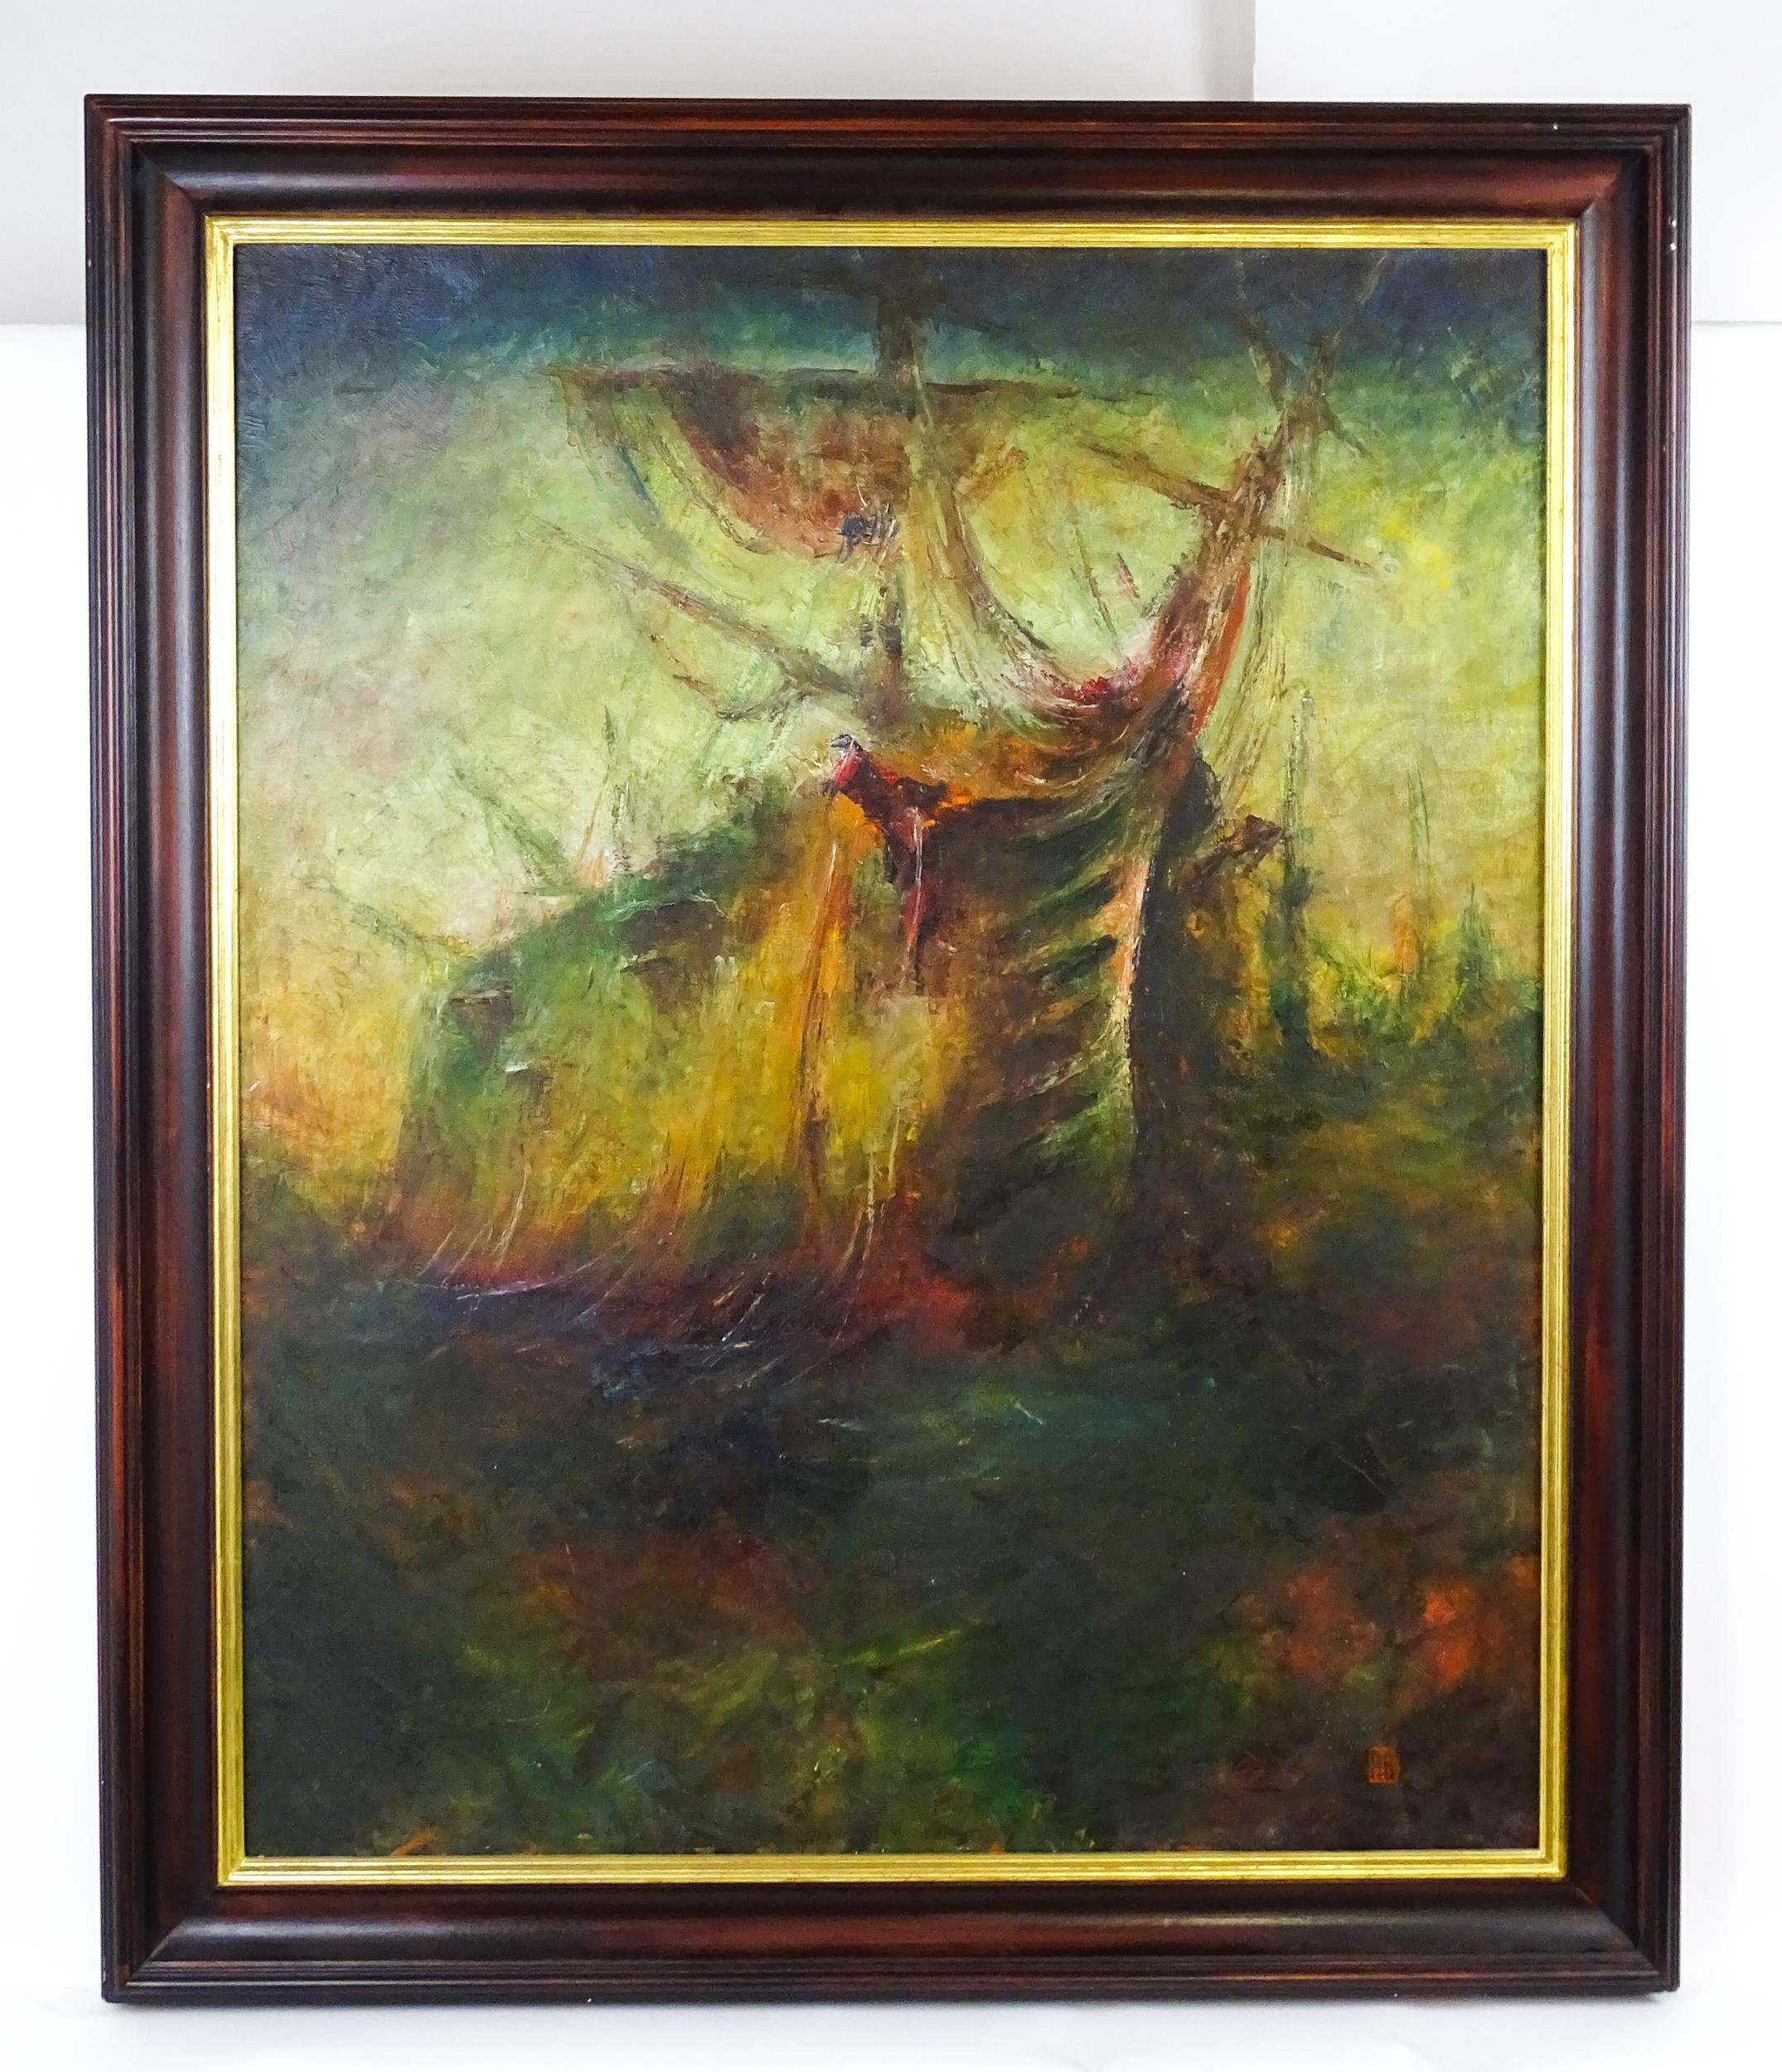 Alexander Akhanov (b. 1957), Russian School, Oil on canvas, Man of War ship in high seas. Signed